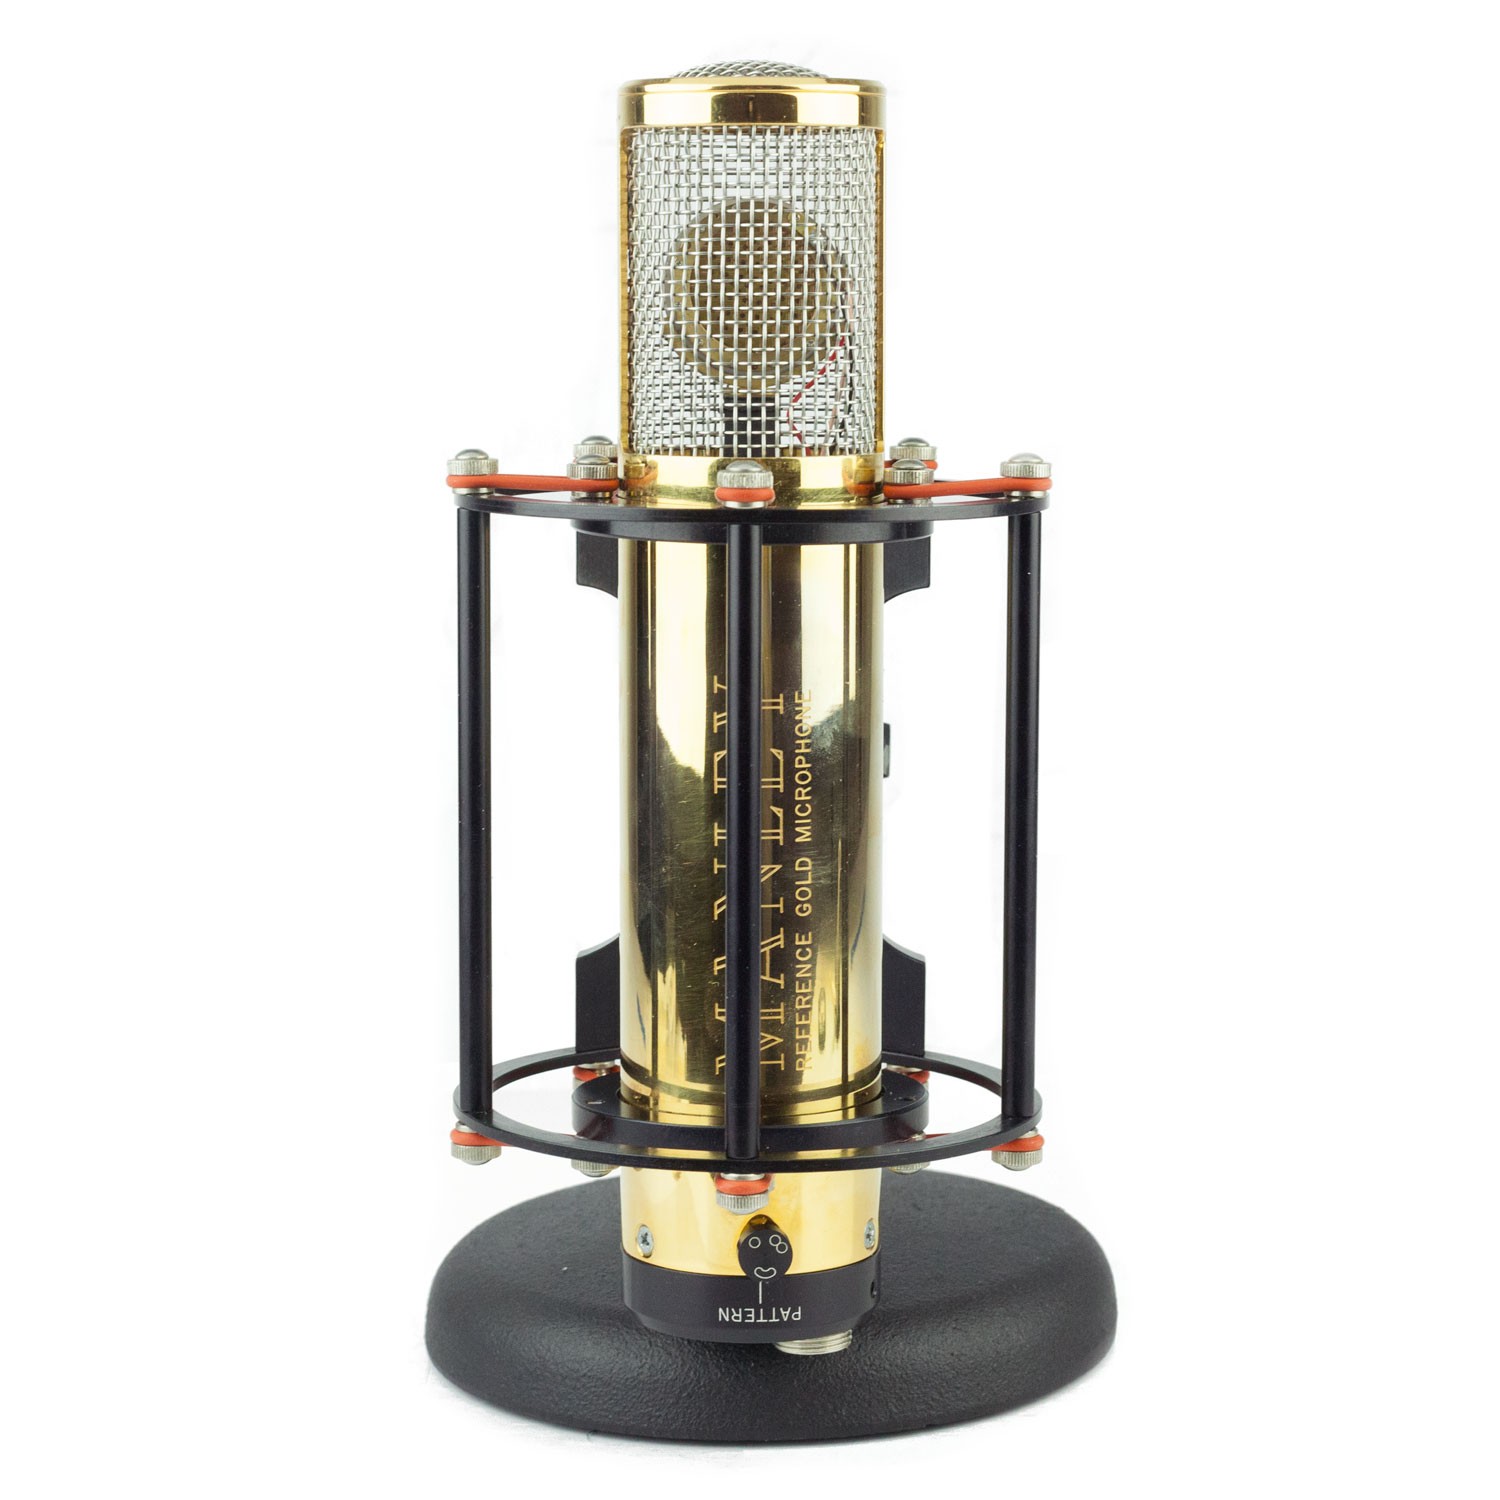 Manley Reference Mono Gold Microphone giá tốt nhất tại TP.HCM